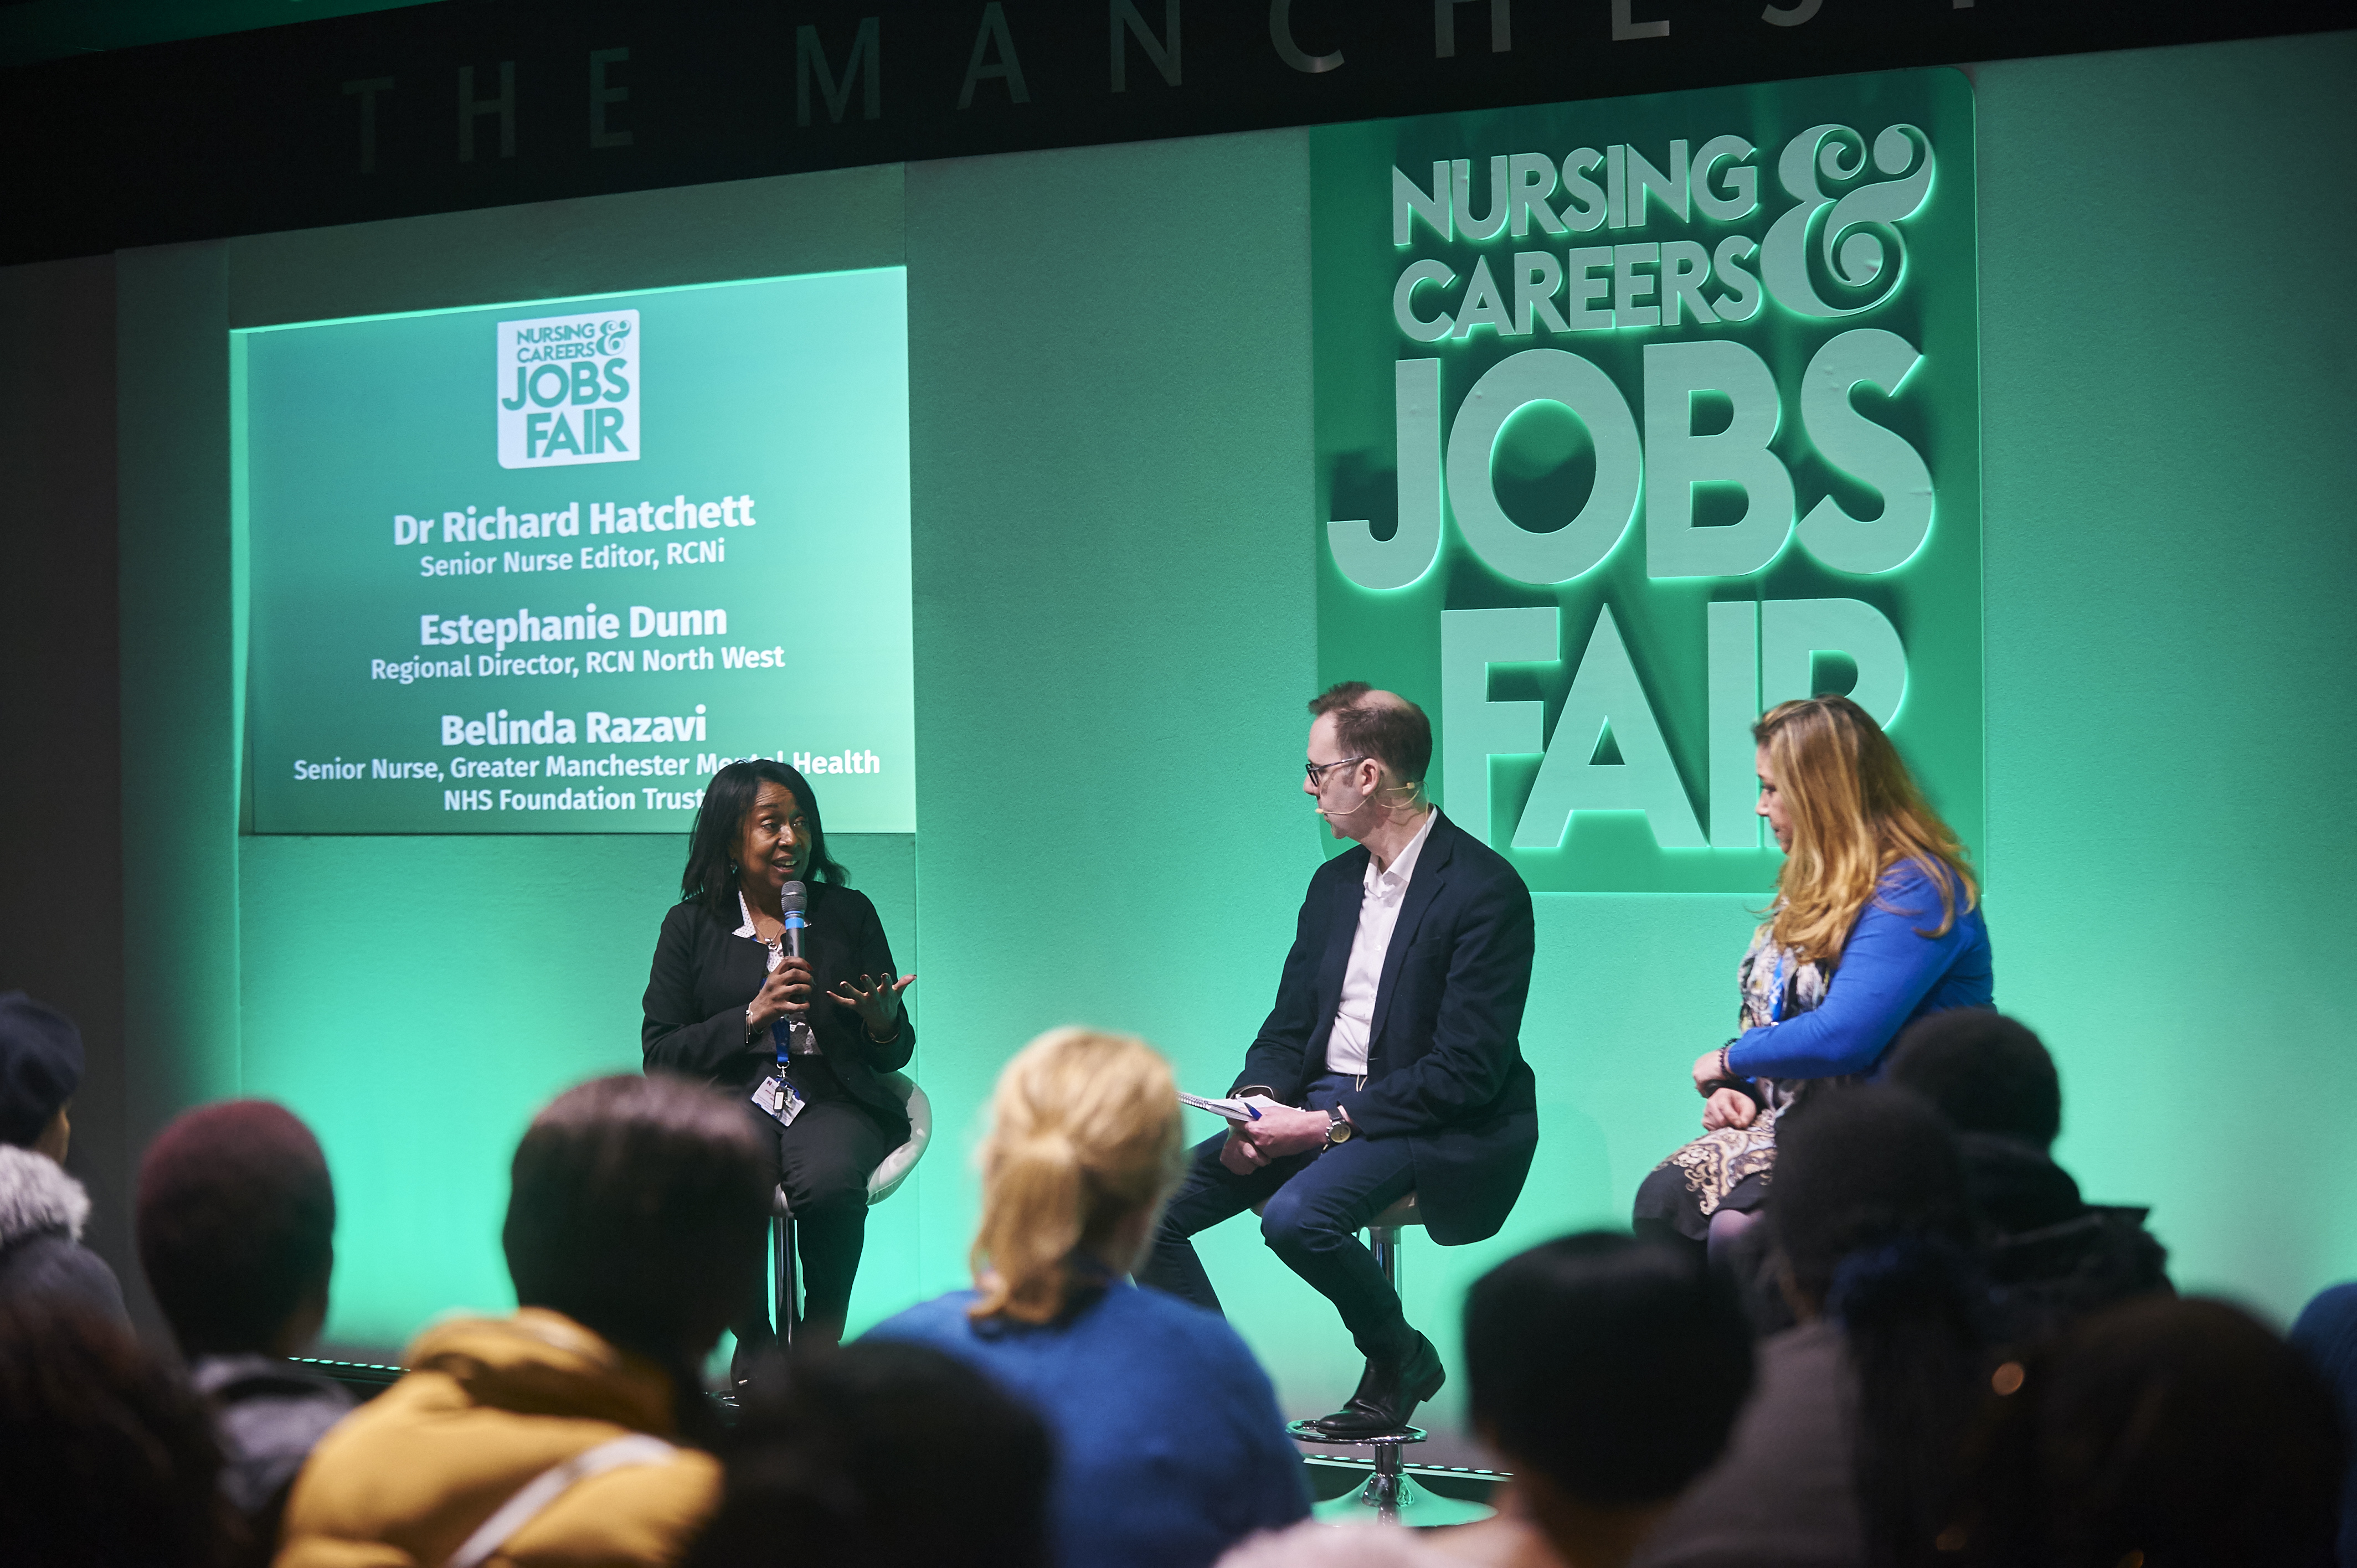 Panel talk at RCNi nursing careers and jobs fair Leicester